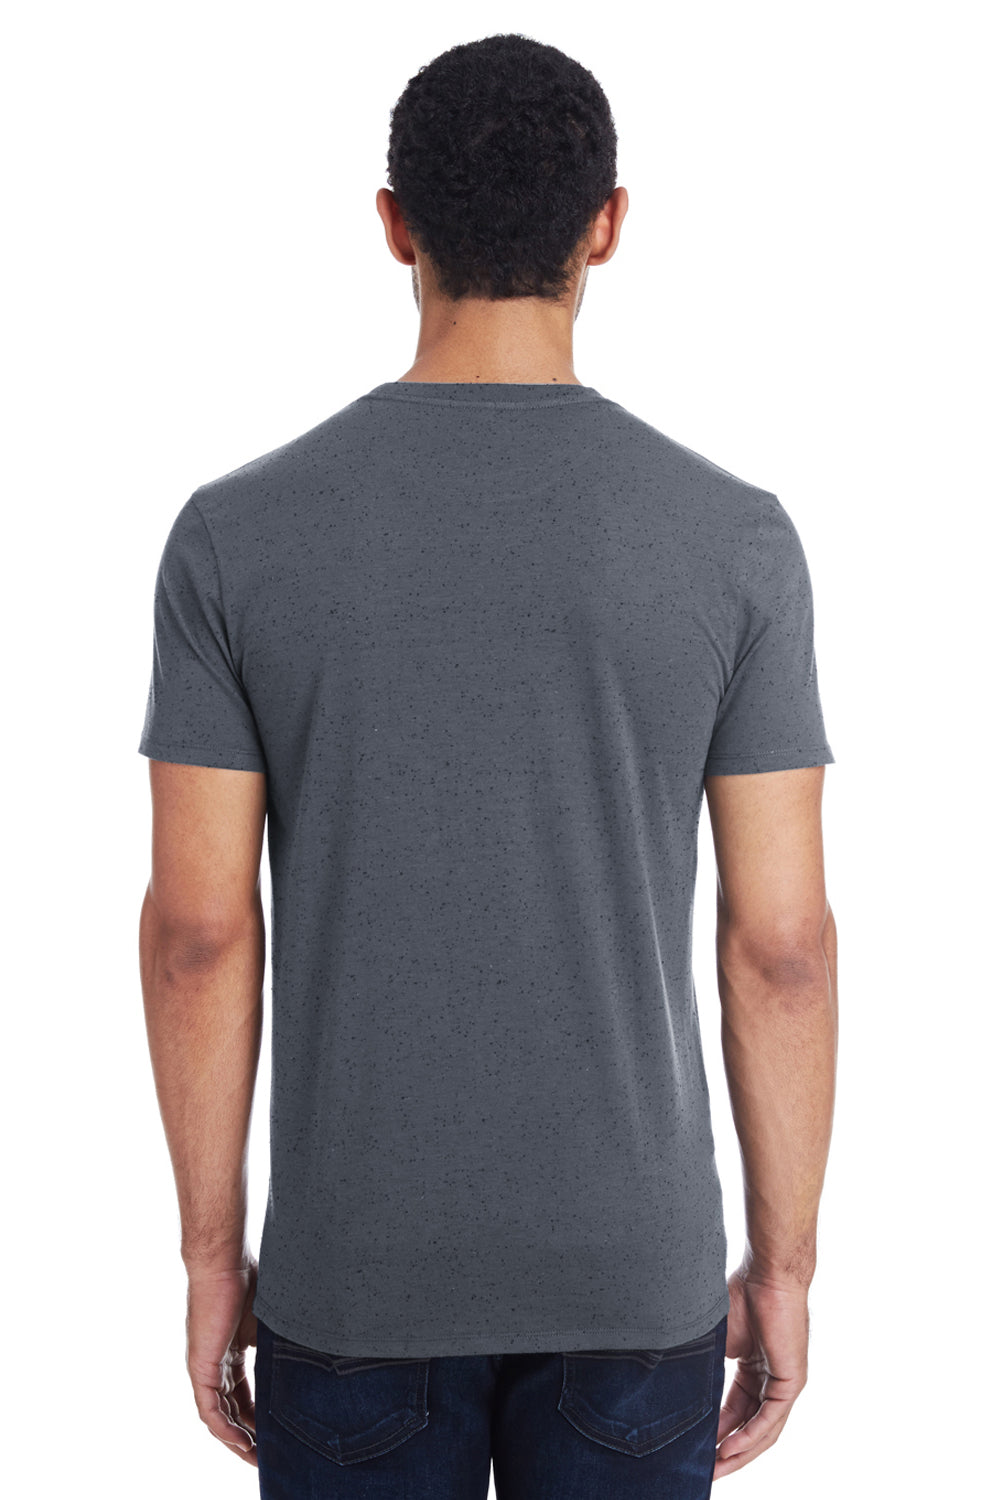 Threadfast Apparel 103A Mens Fleck Short Sleeve Crewneck T-Shirt Charcoal Grey Back